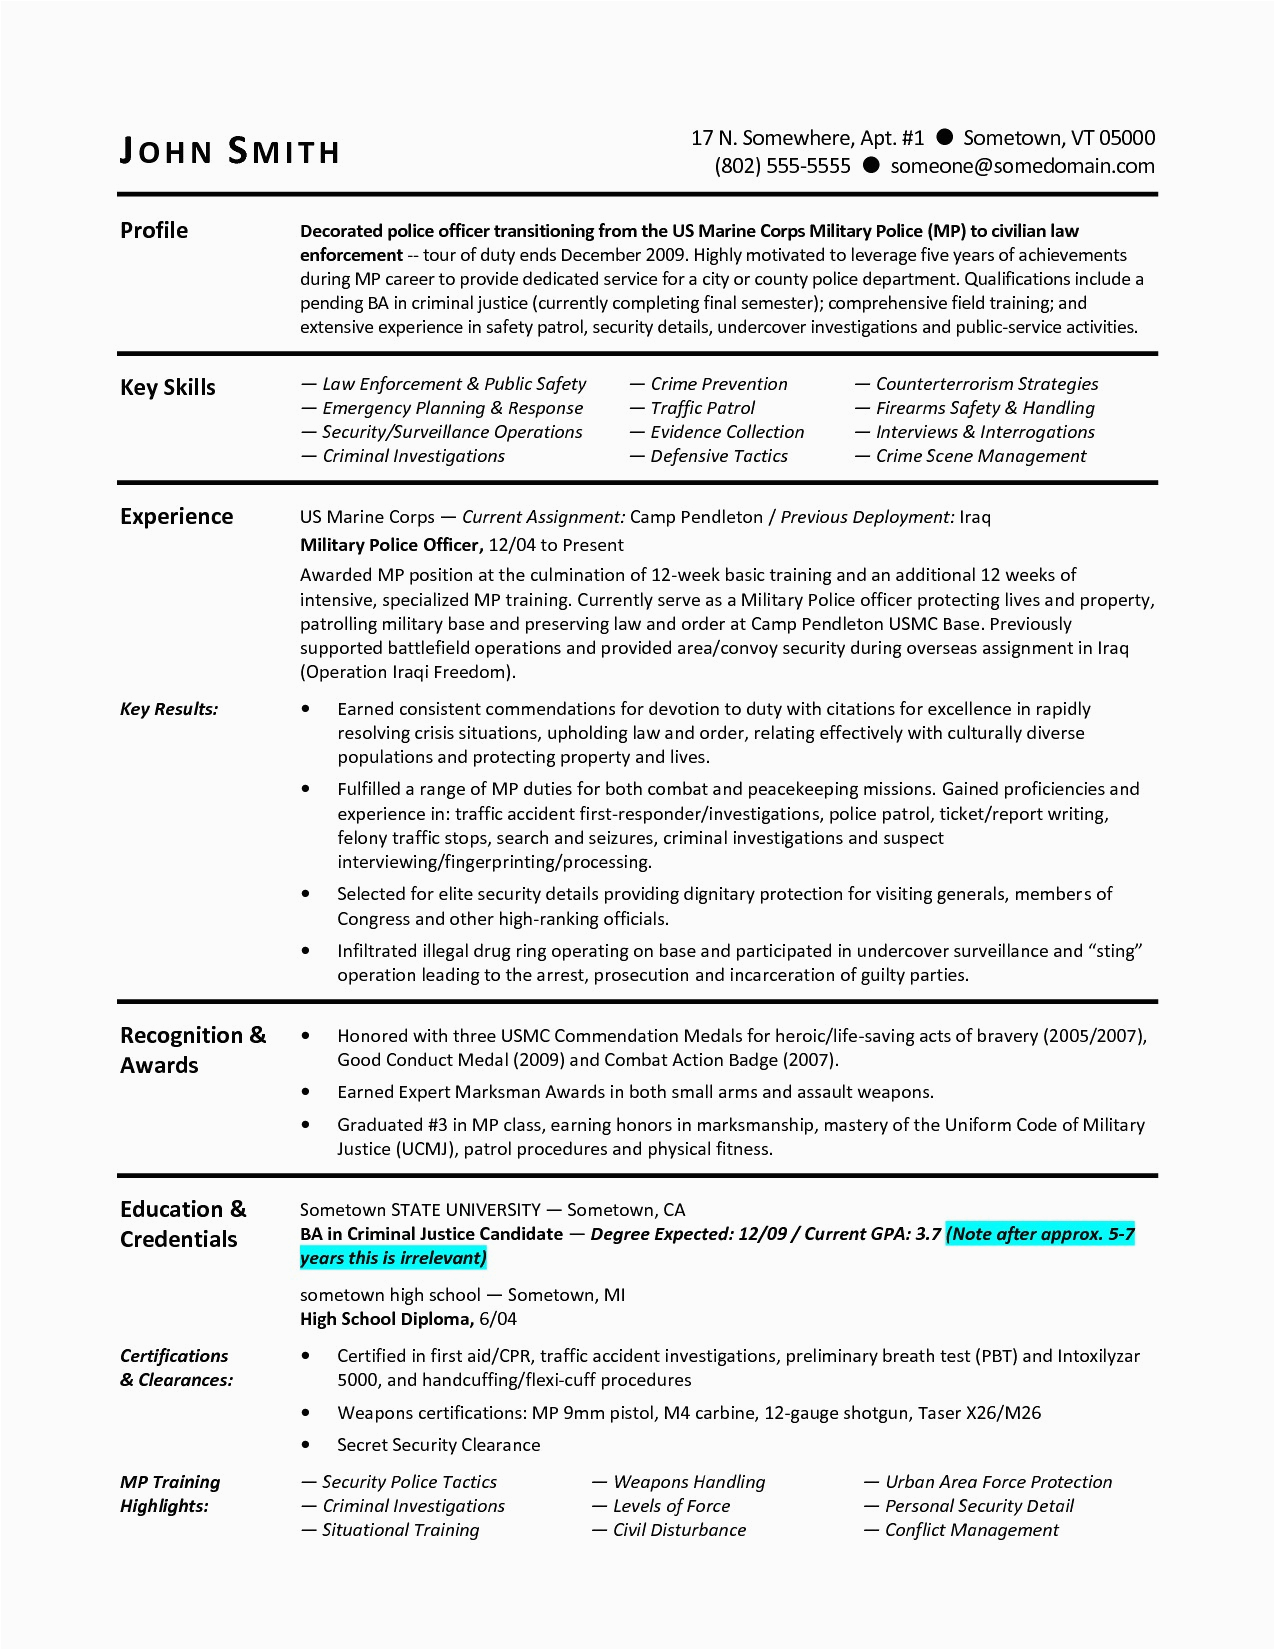 Sample Resume Objectives for Law Enforcement 11 Law Enforcement Resume Collection